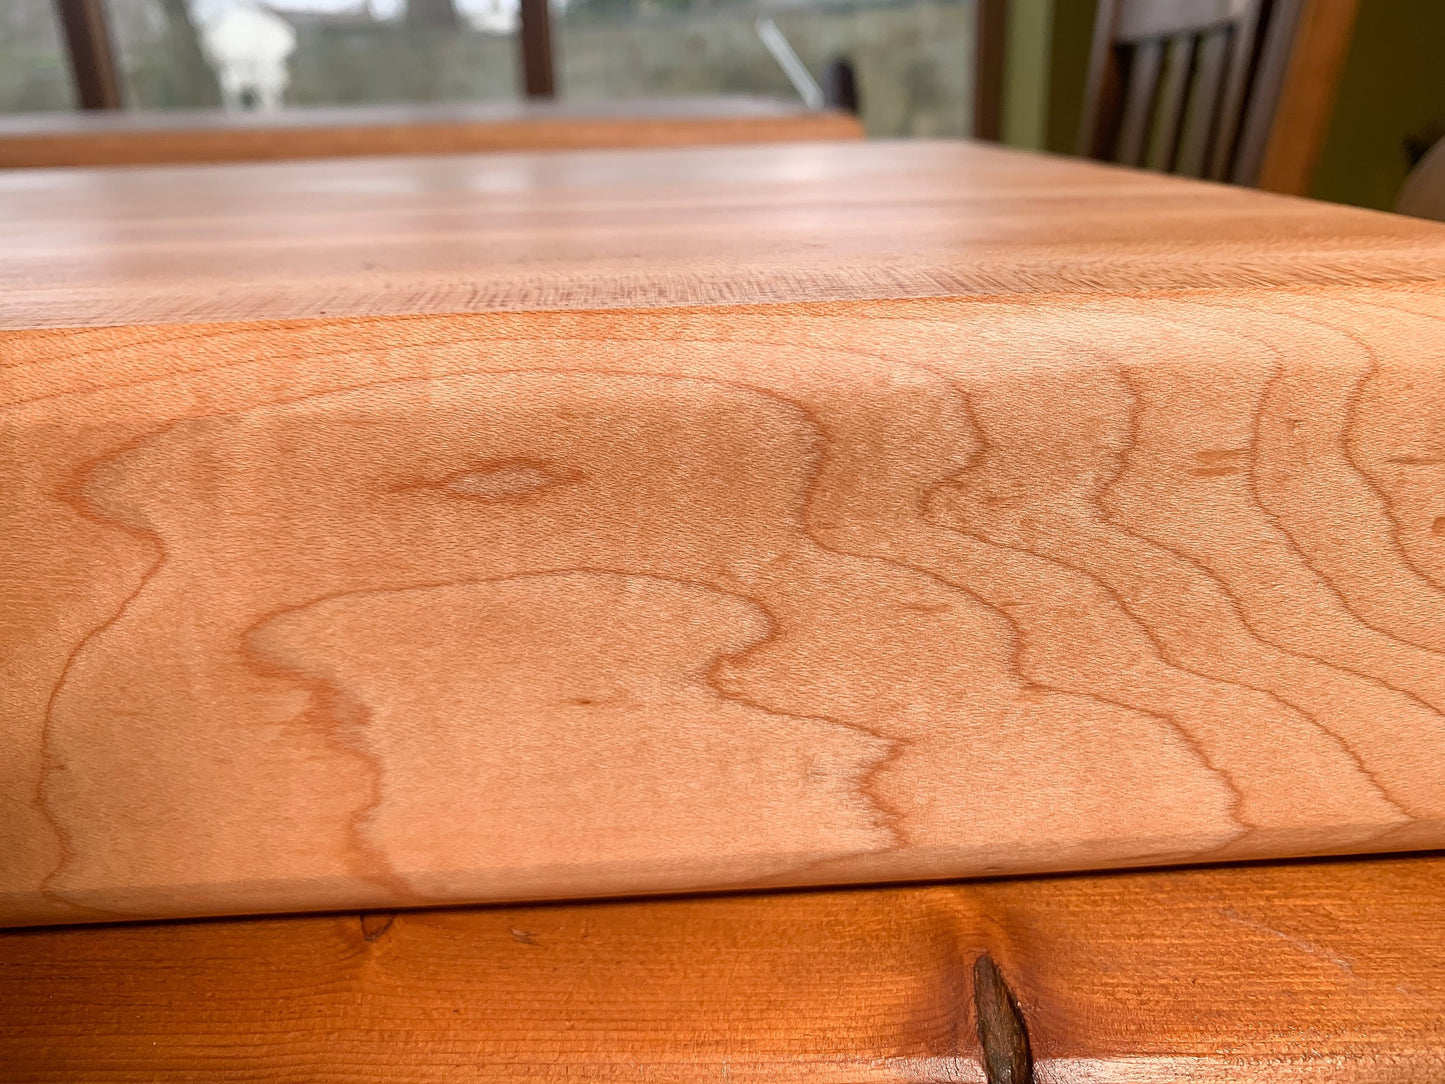 Turntable vibration isolation platform.  Oak, walnut or maple edge grain.  Custom made to order.